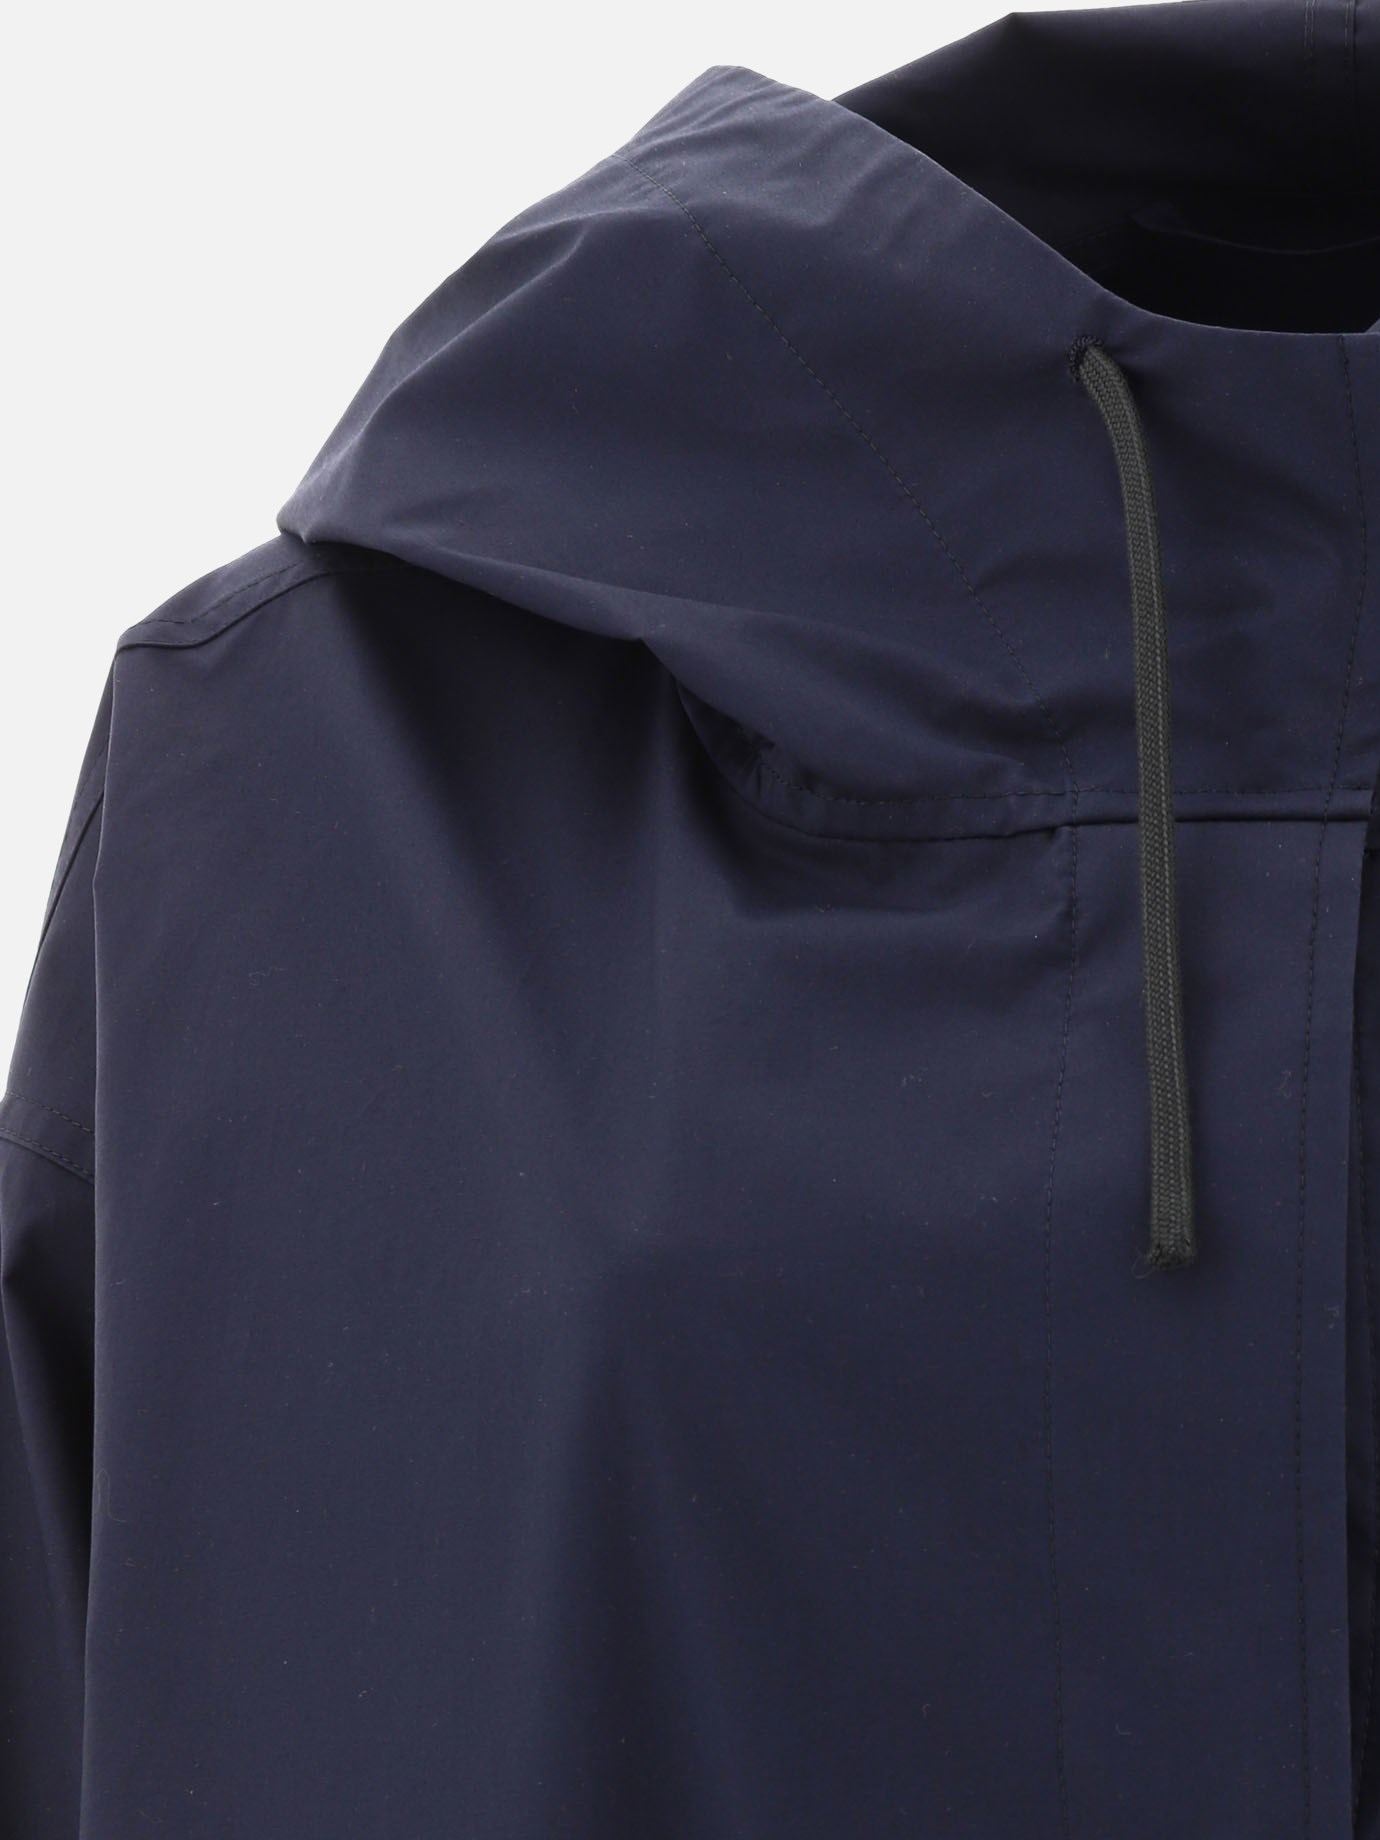 Hooded Raincoat of Jil Sander | Vietti